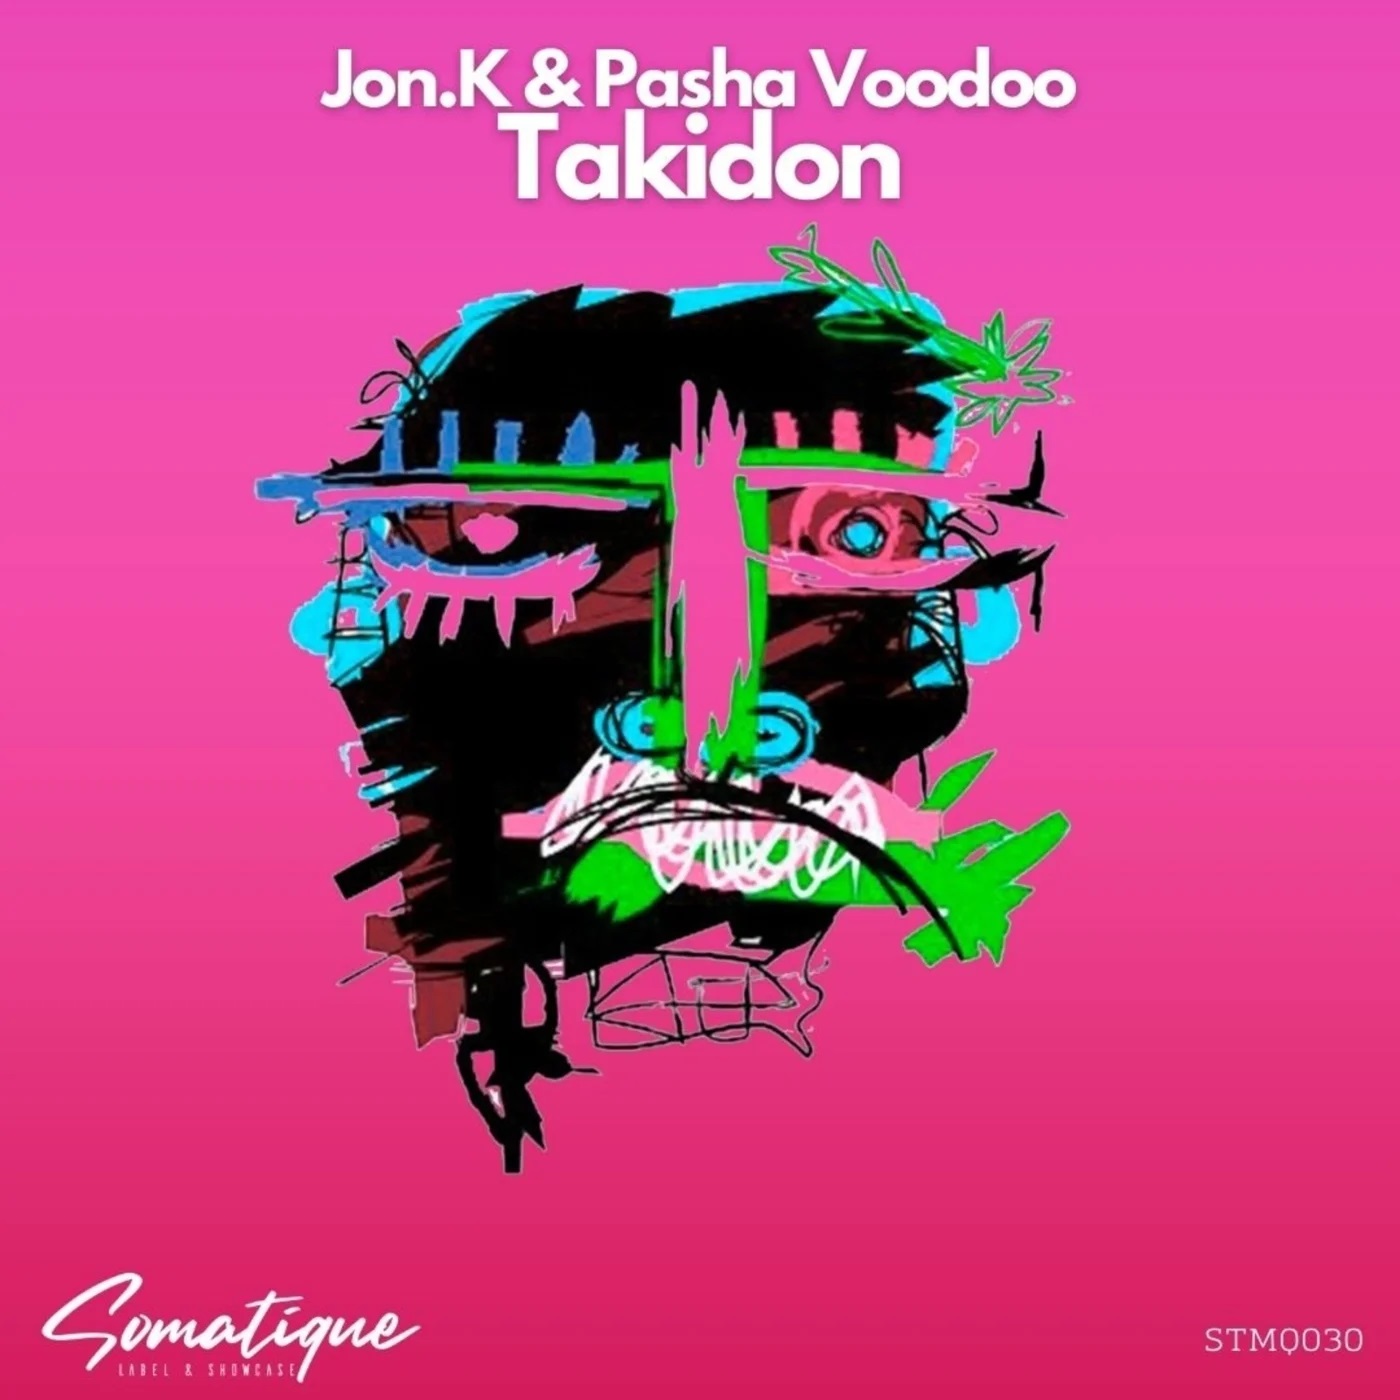 Jon.K & Pasha Voodoo - Takidon (Original Mix)